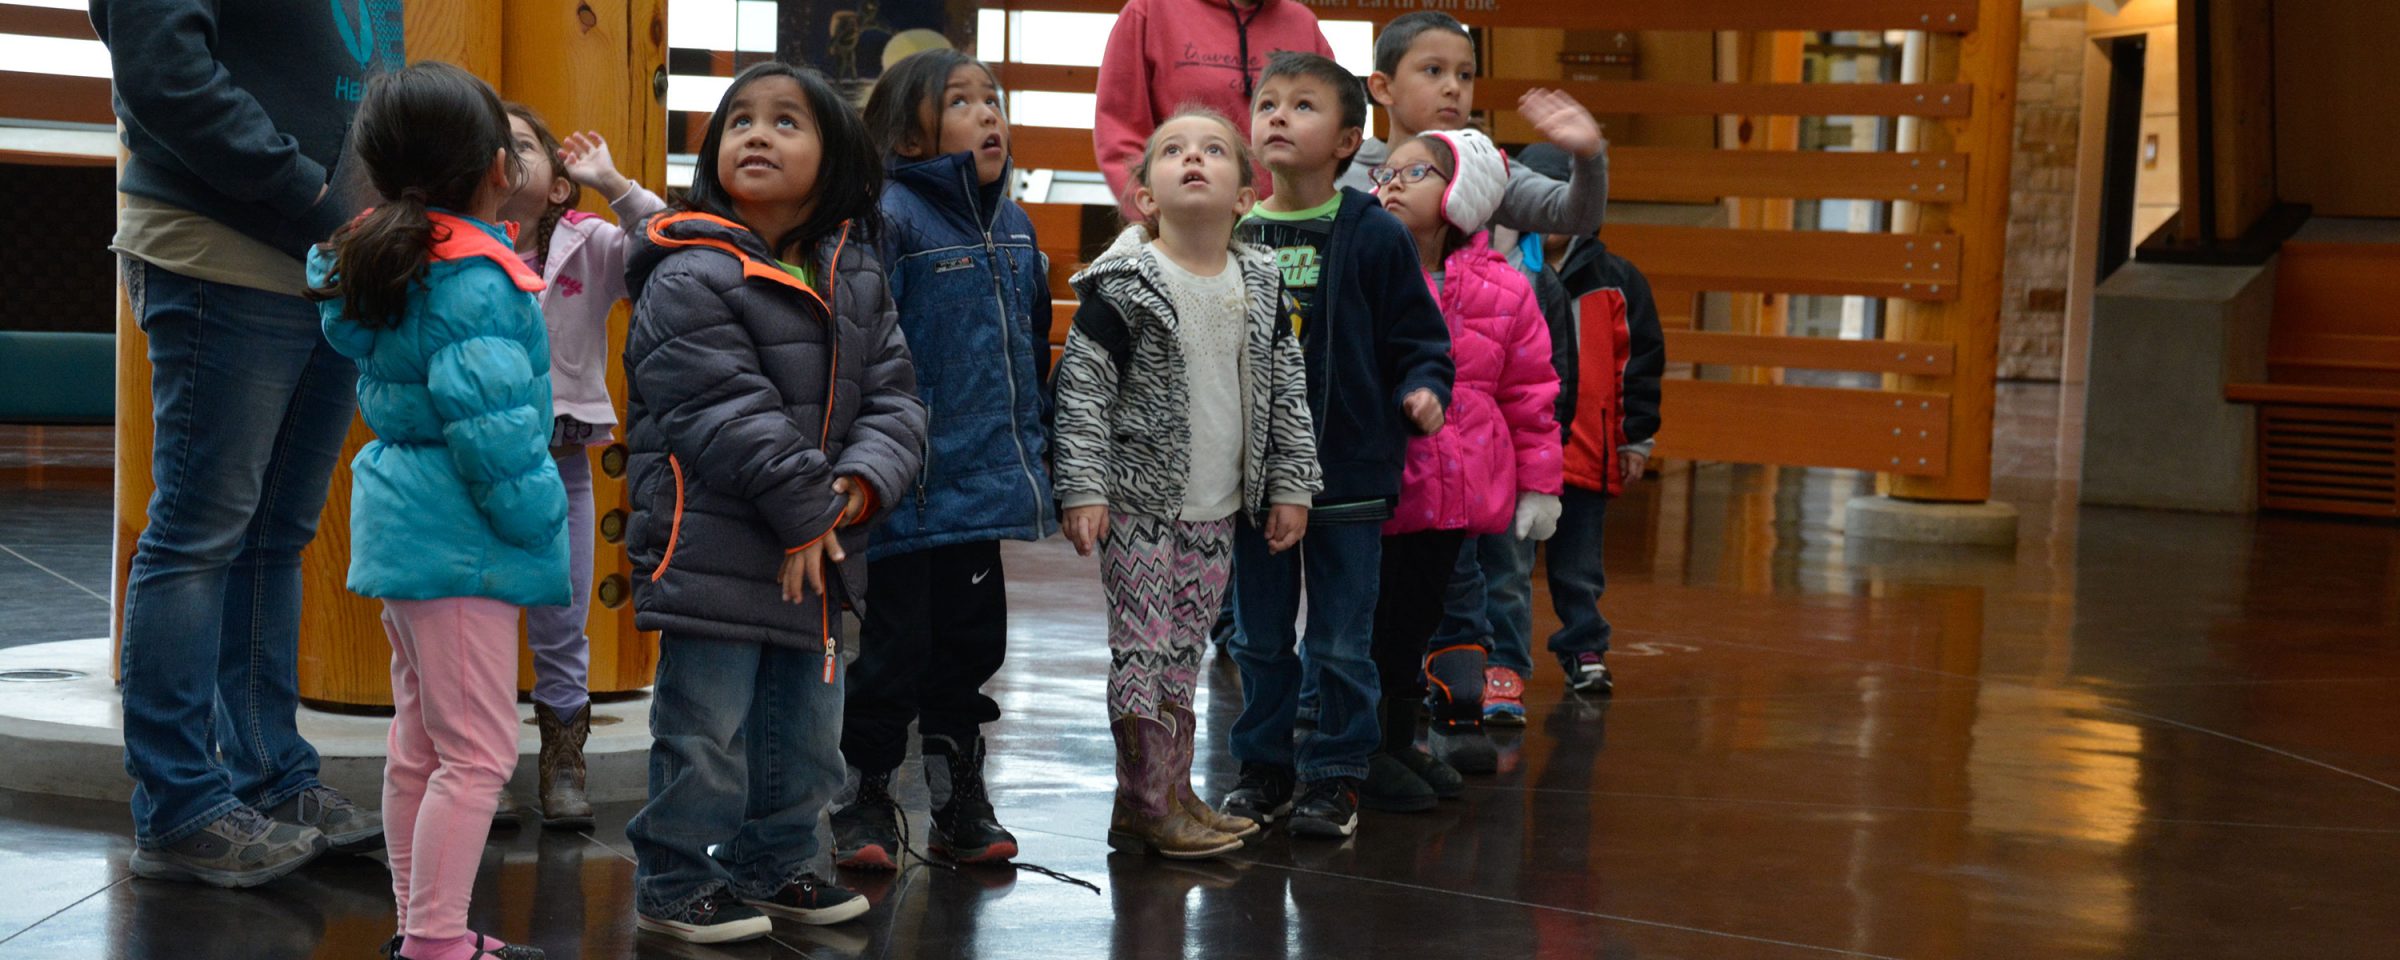 image of headstart kids looking up in museum